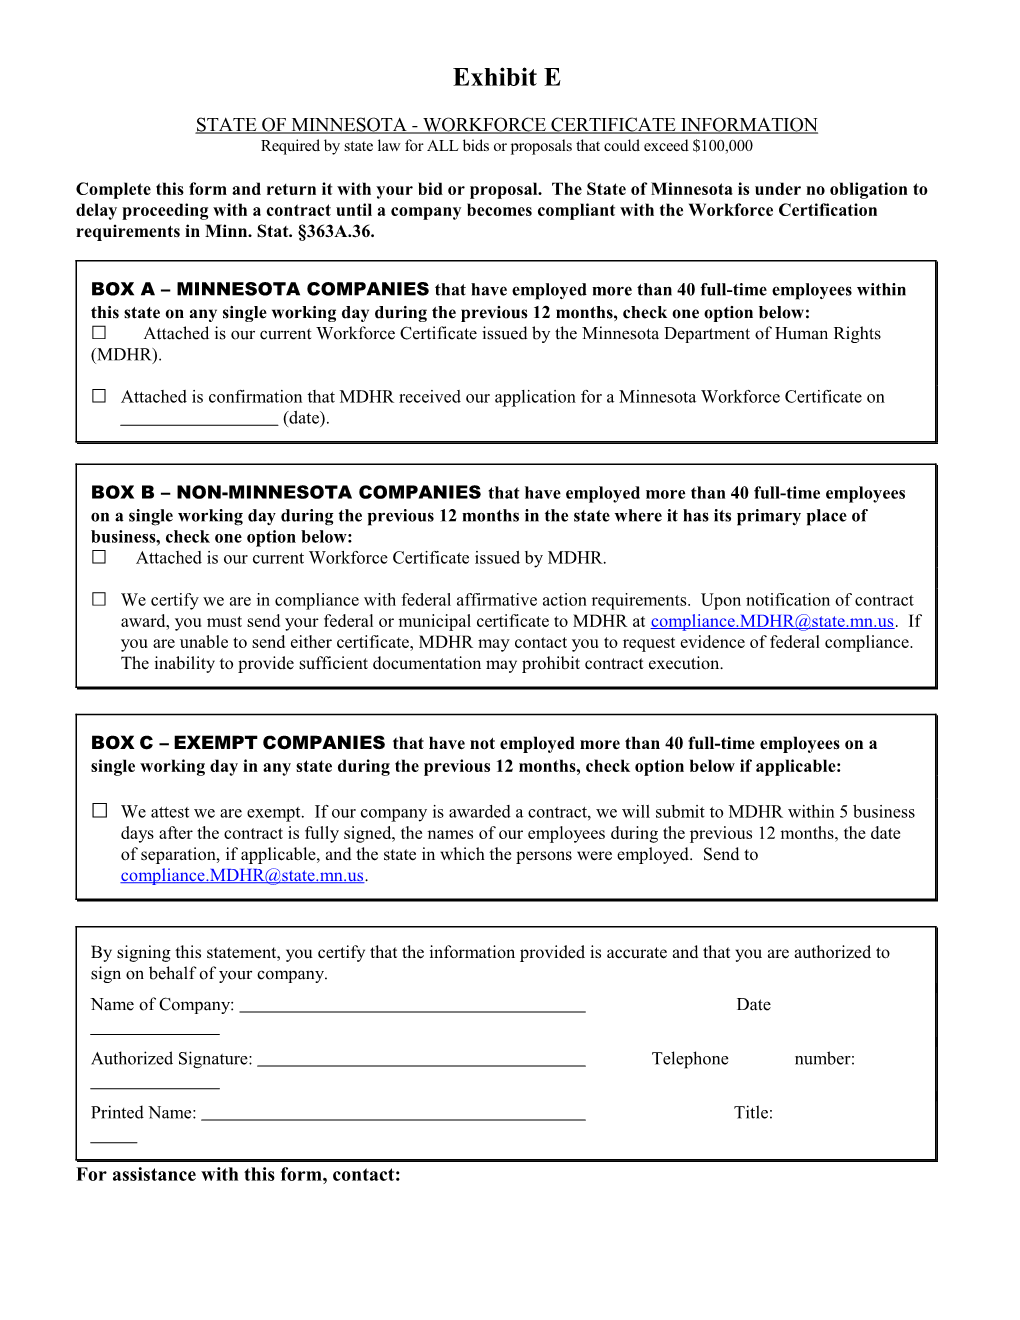 State of Minnesota - Workforce Certificate Information